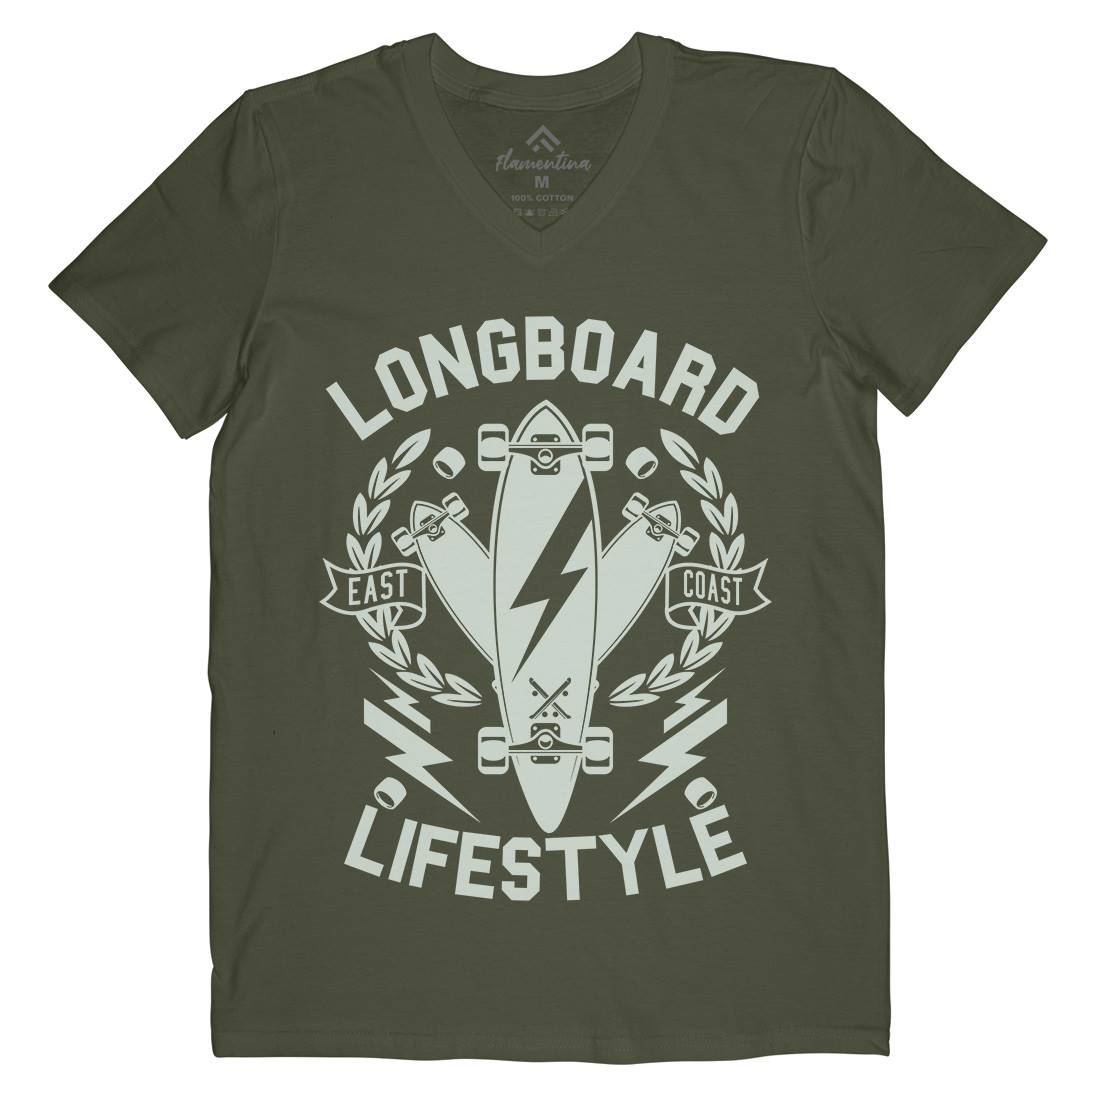 Longboard Lifestyle Mens Organic V-Neck T-Shirt Skate A251